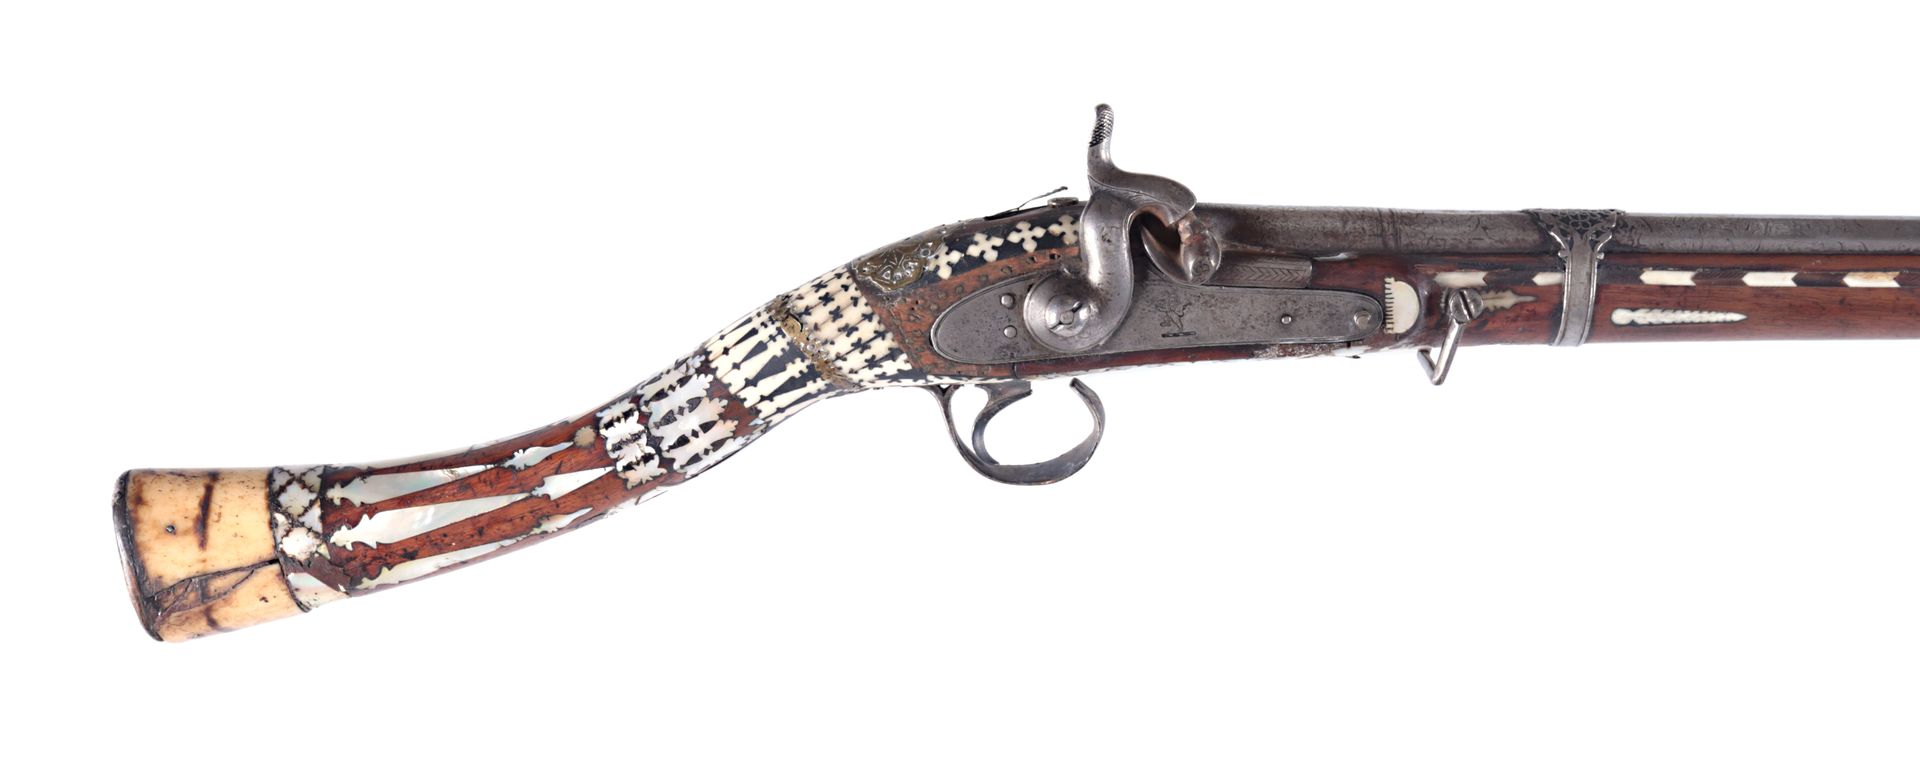 A Georgian Percussion Rifle, ca. 1850 Fusil à percussion géorgien, vers 1850
Le &hellip;